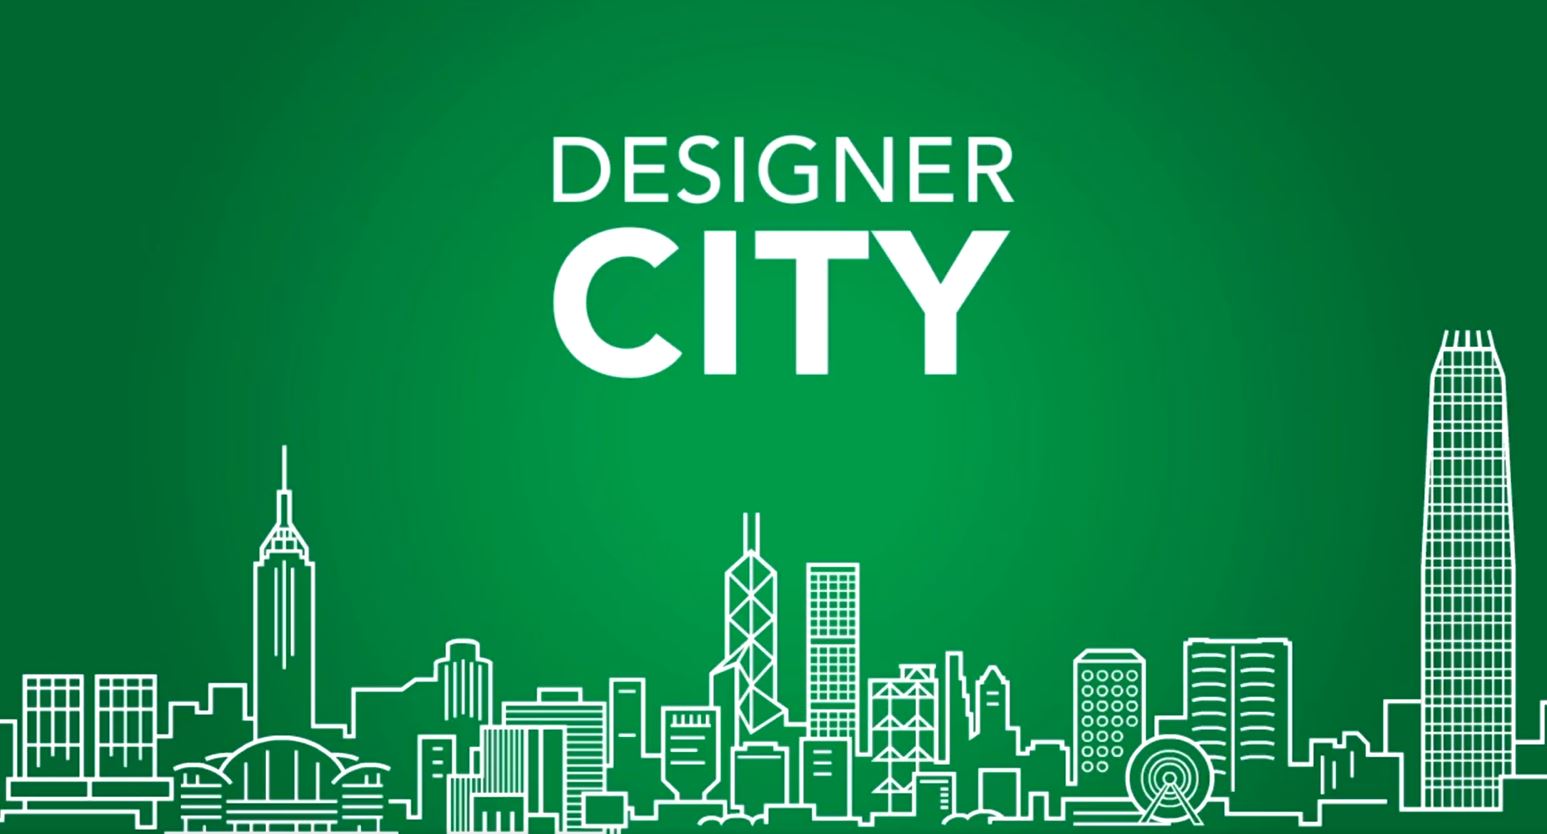 Brand Hong Kong: Designer City (Dec 2016) 